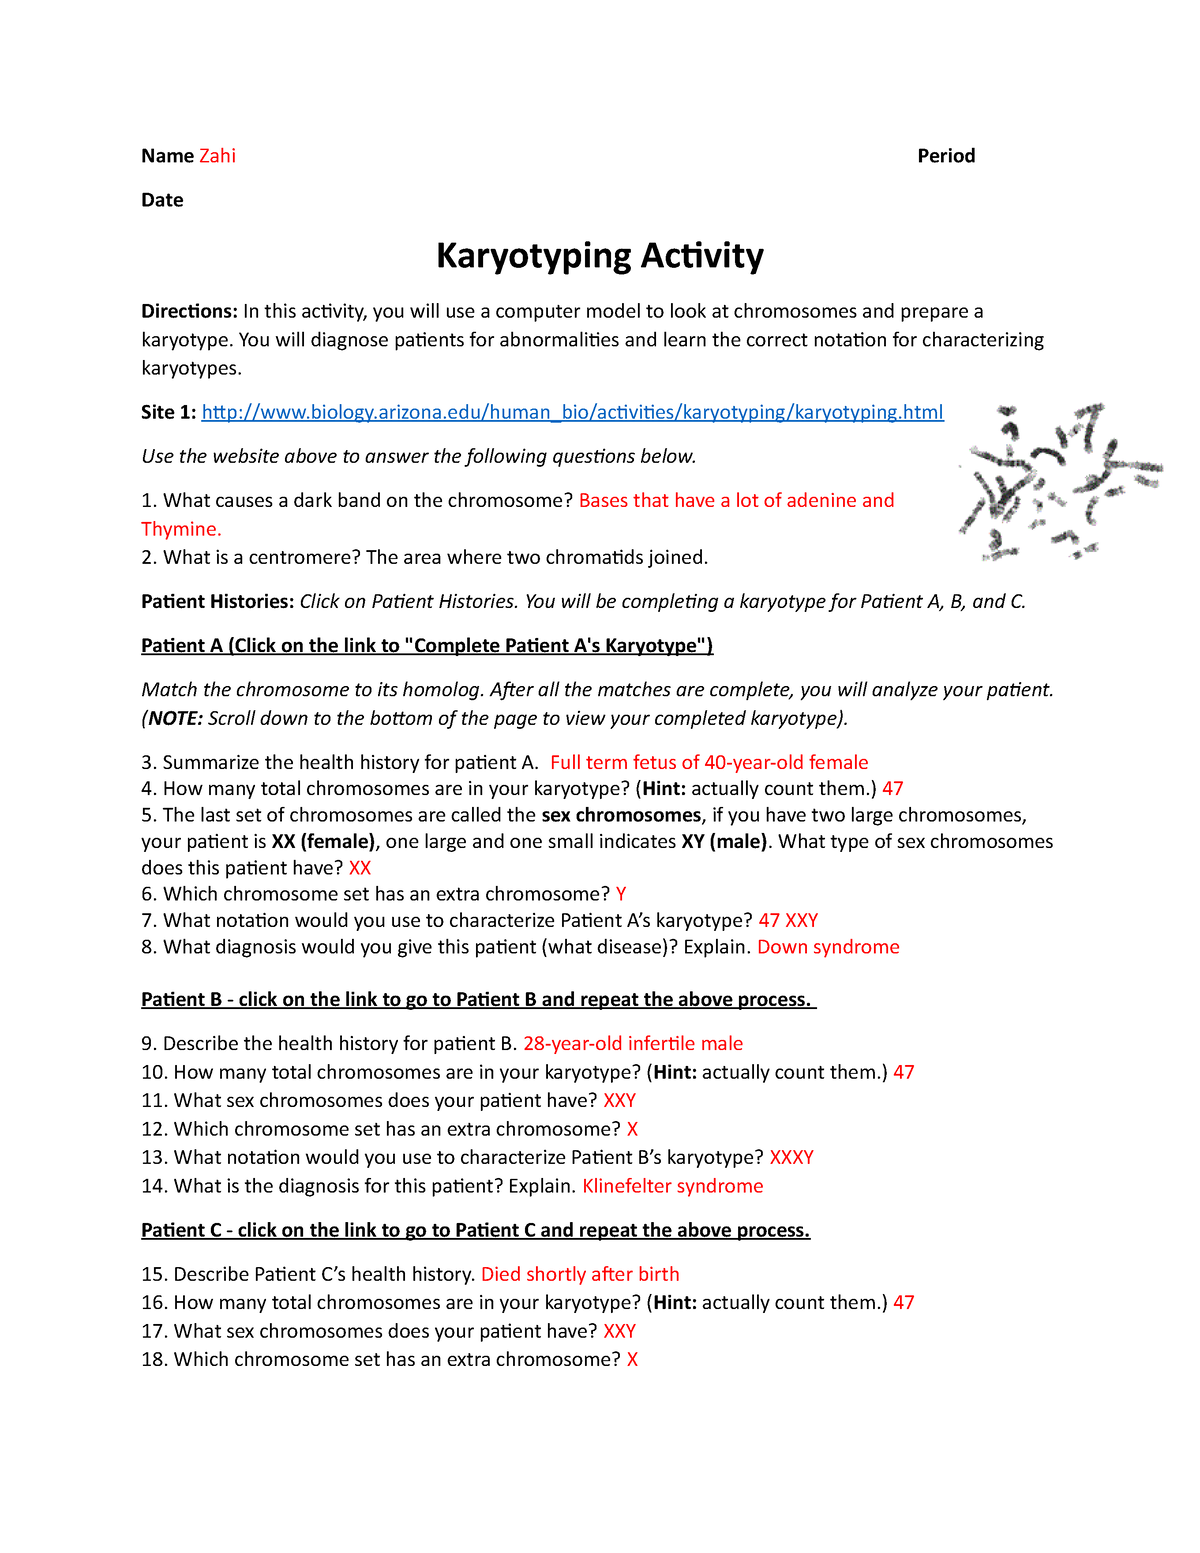 karyotyping-activity-mb-1-answer-key-name-zahi-period-date